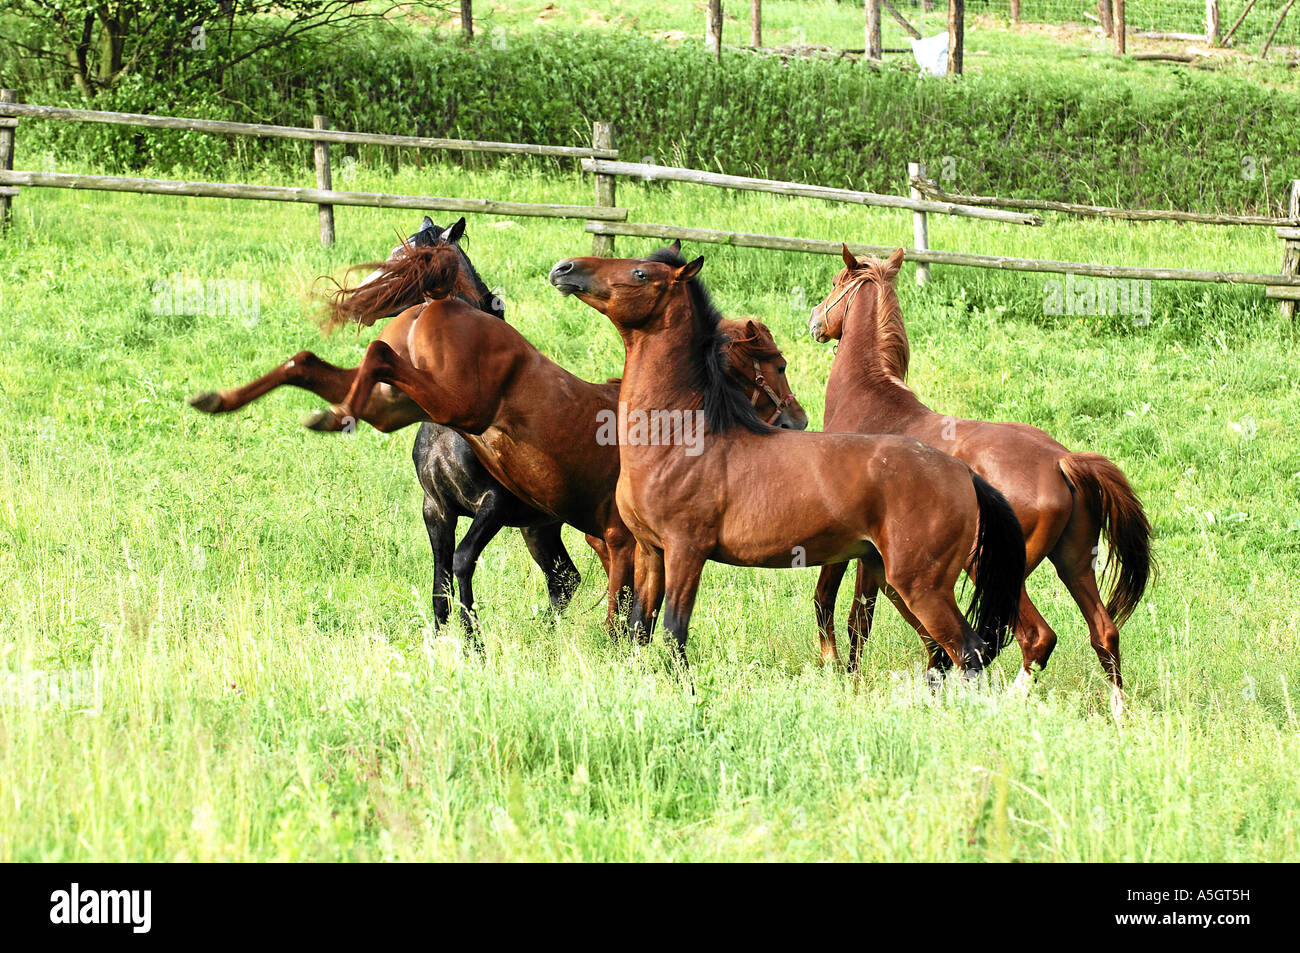 Gidran Horse Gidranpferd Stock Photo